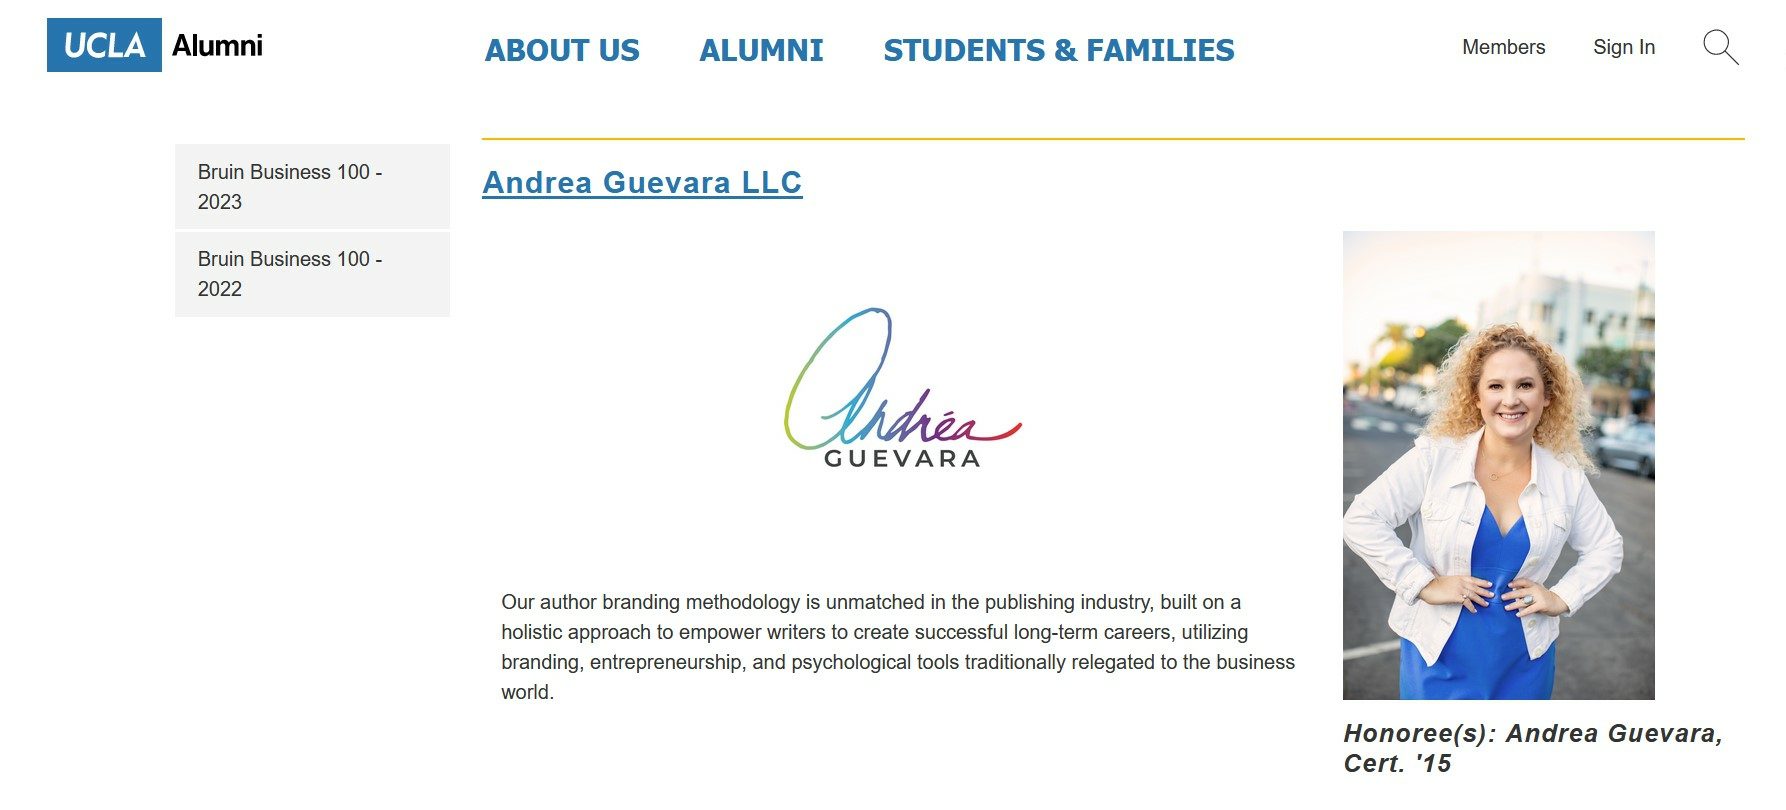 Andrea Guevara named Bruins 100 Business 2023, screenshot